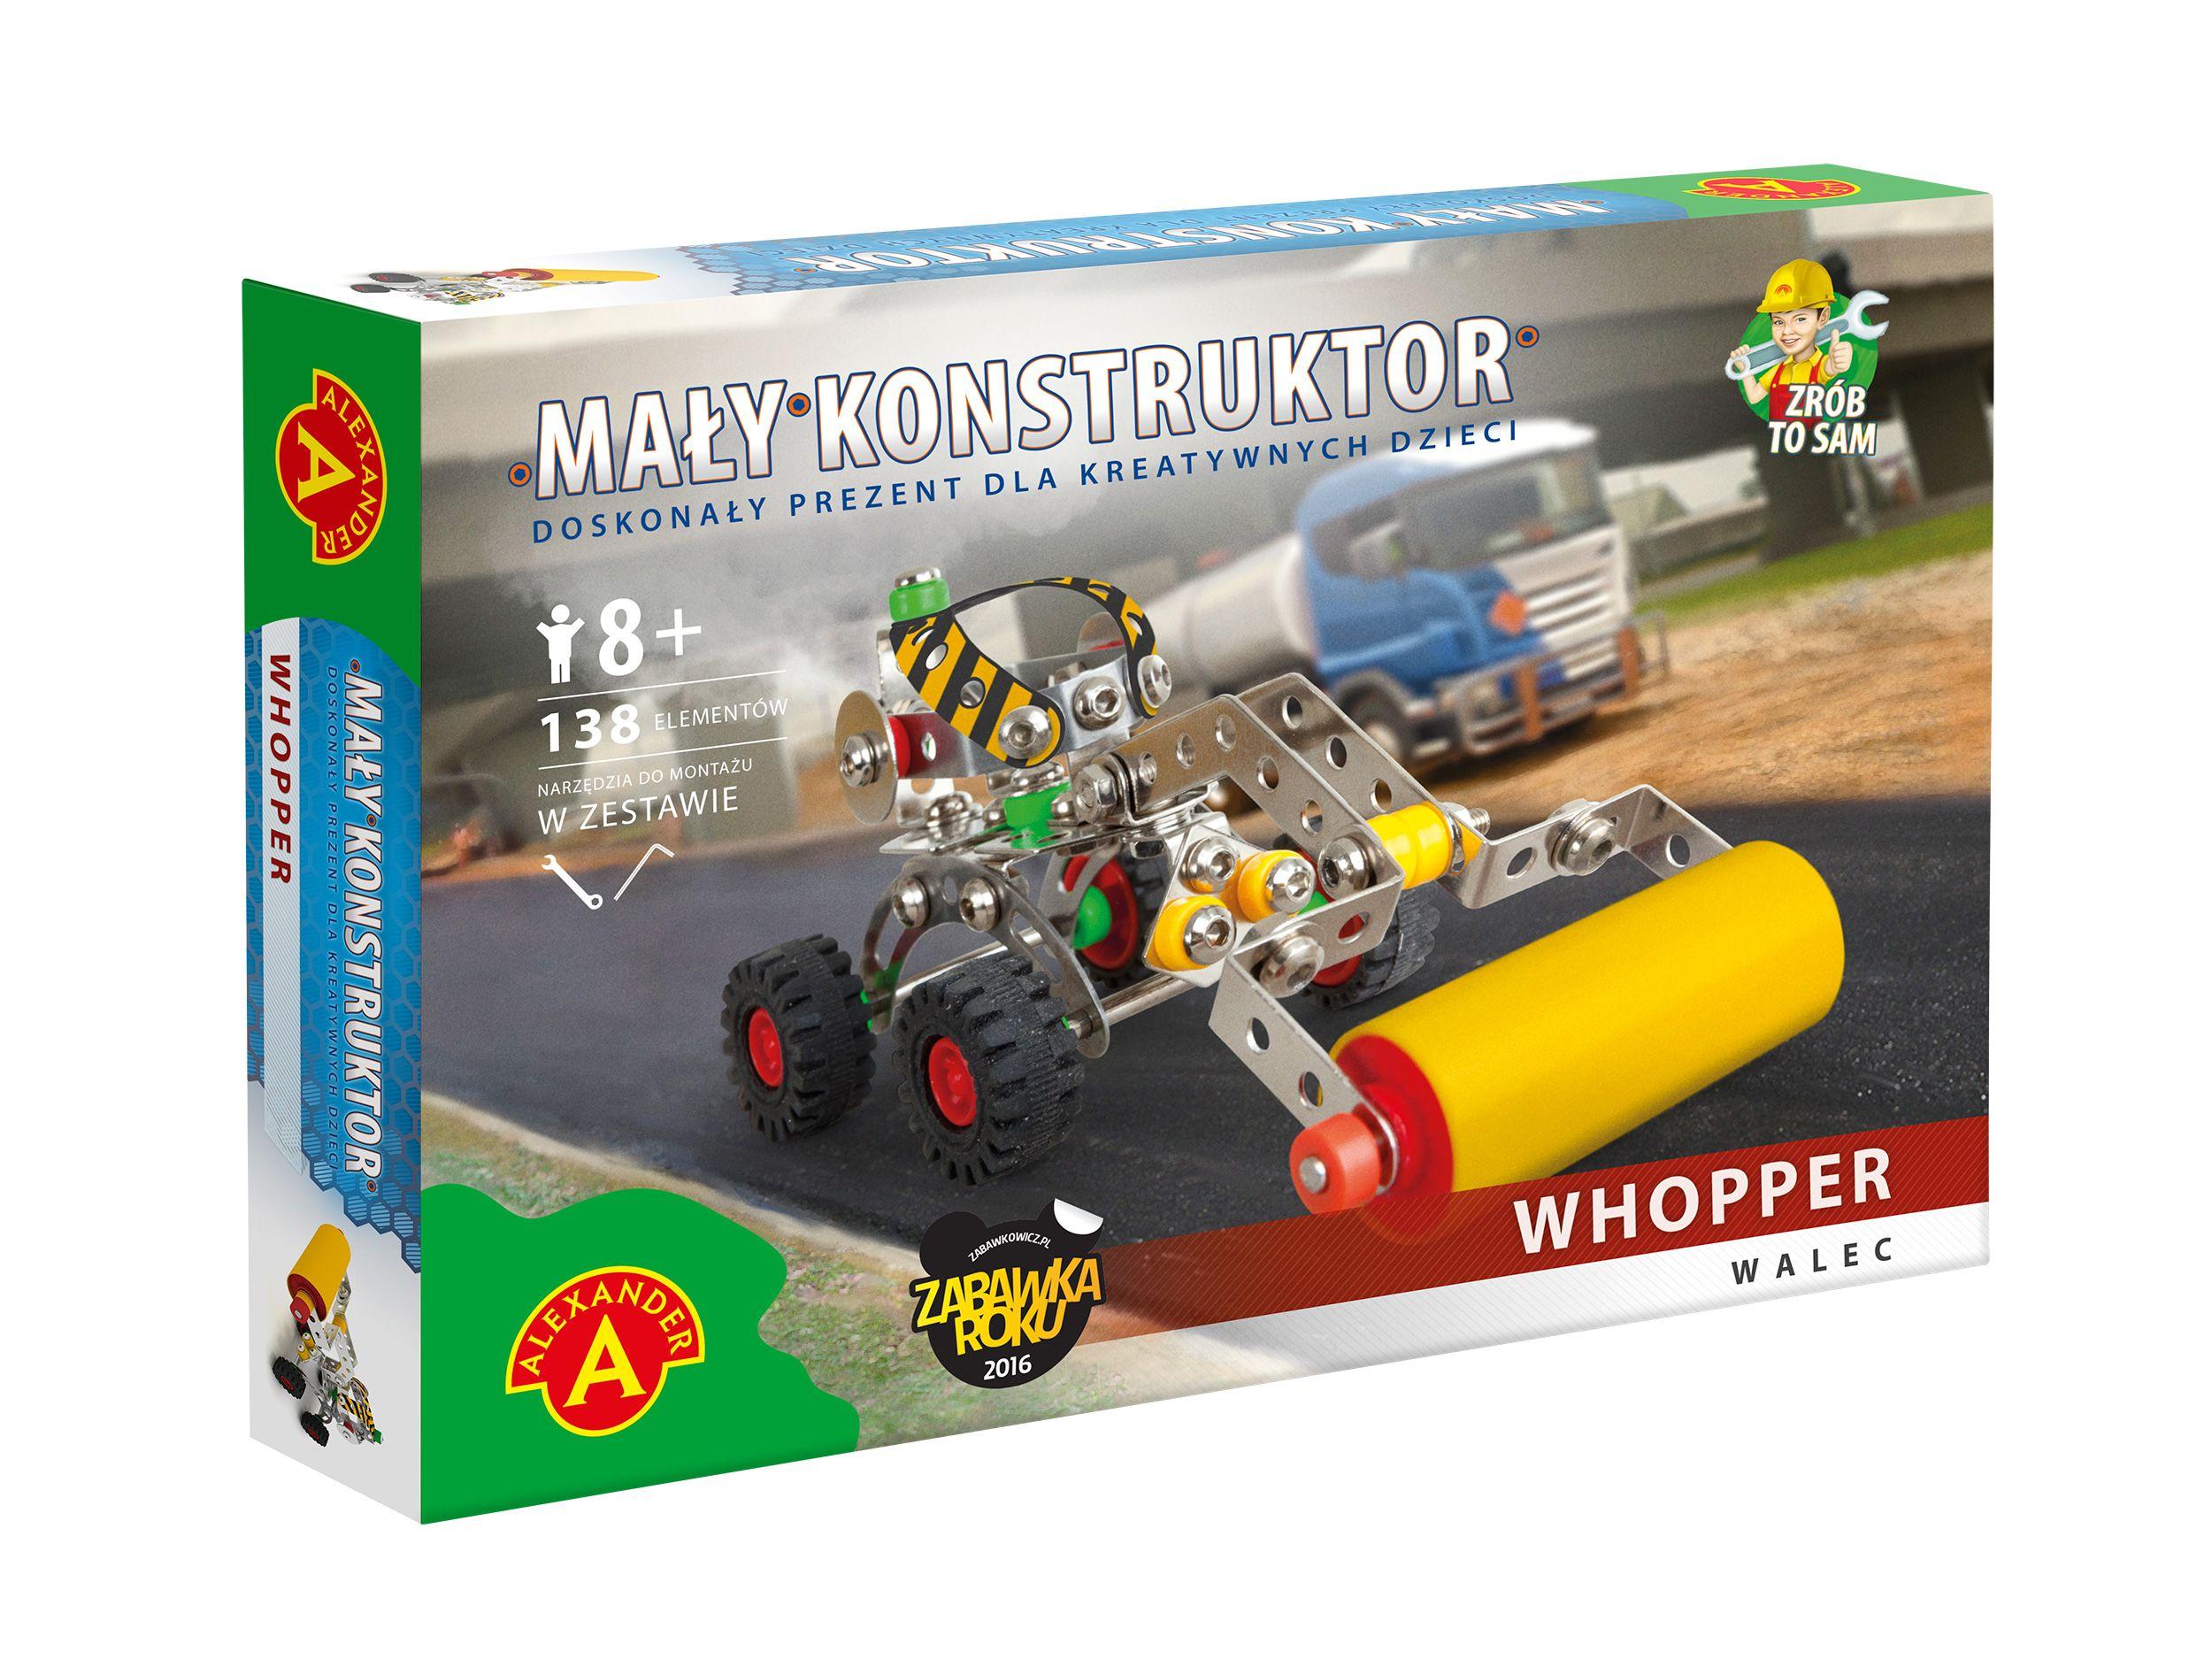 Construction toy Alexander - Little Constructor - Roller